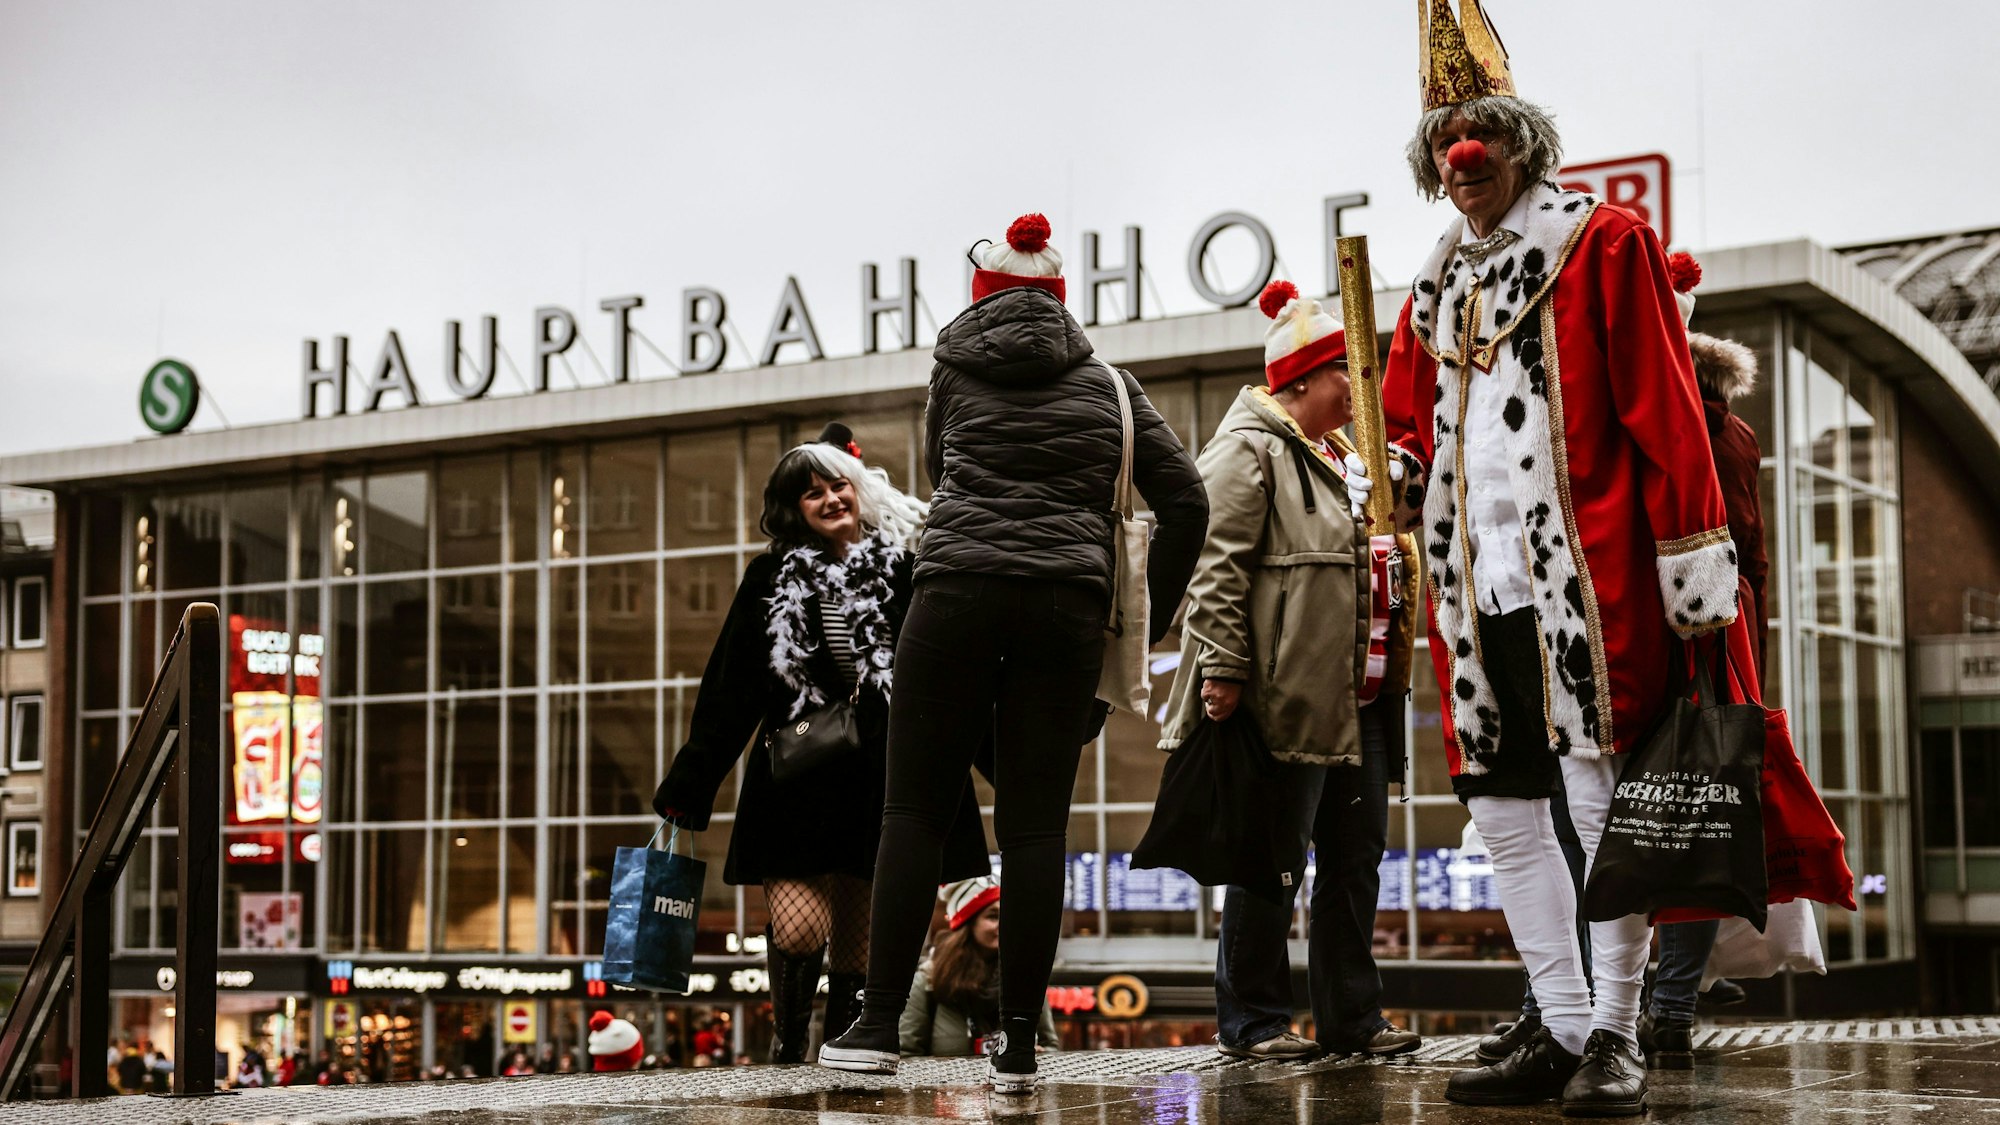 Karnevalisten kommen am Hauptbahnhof an.